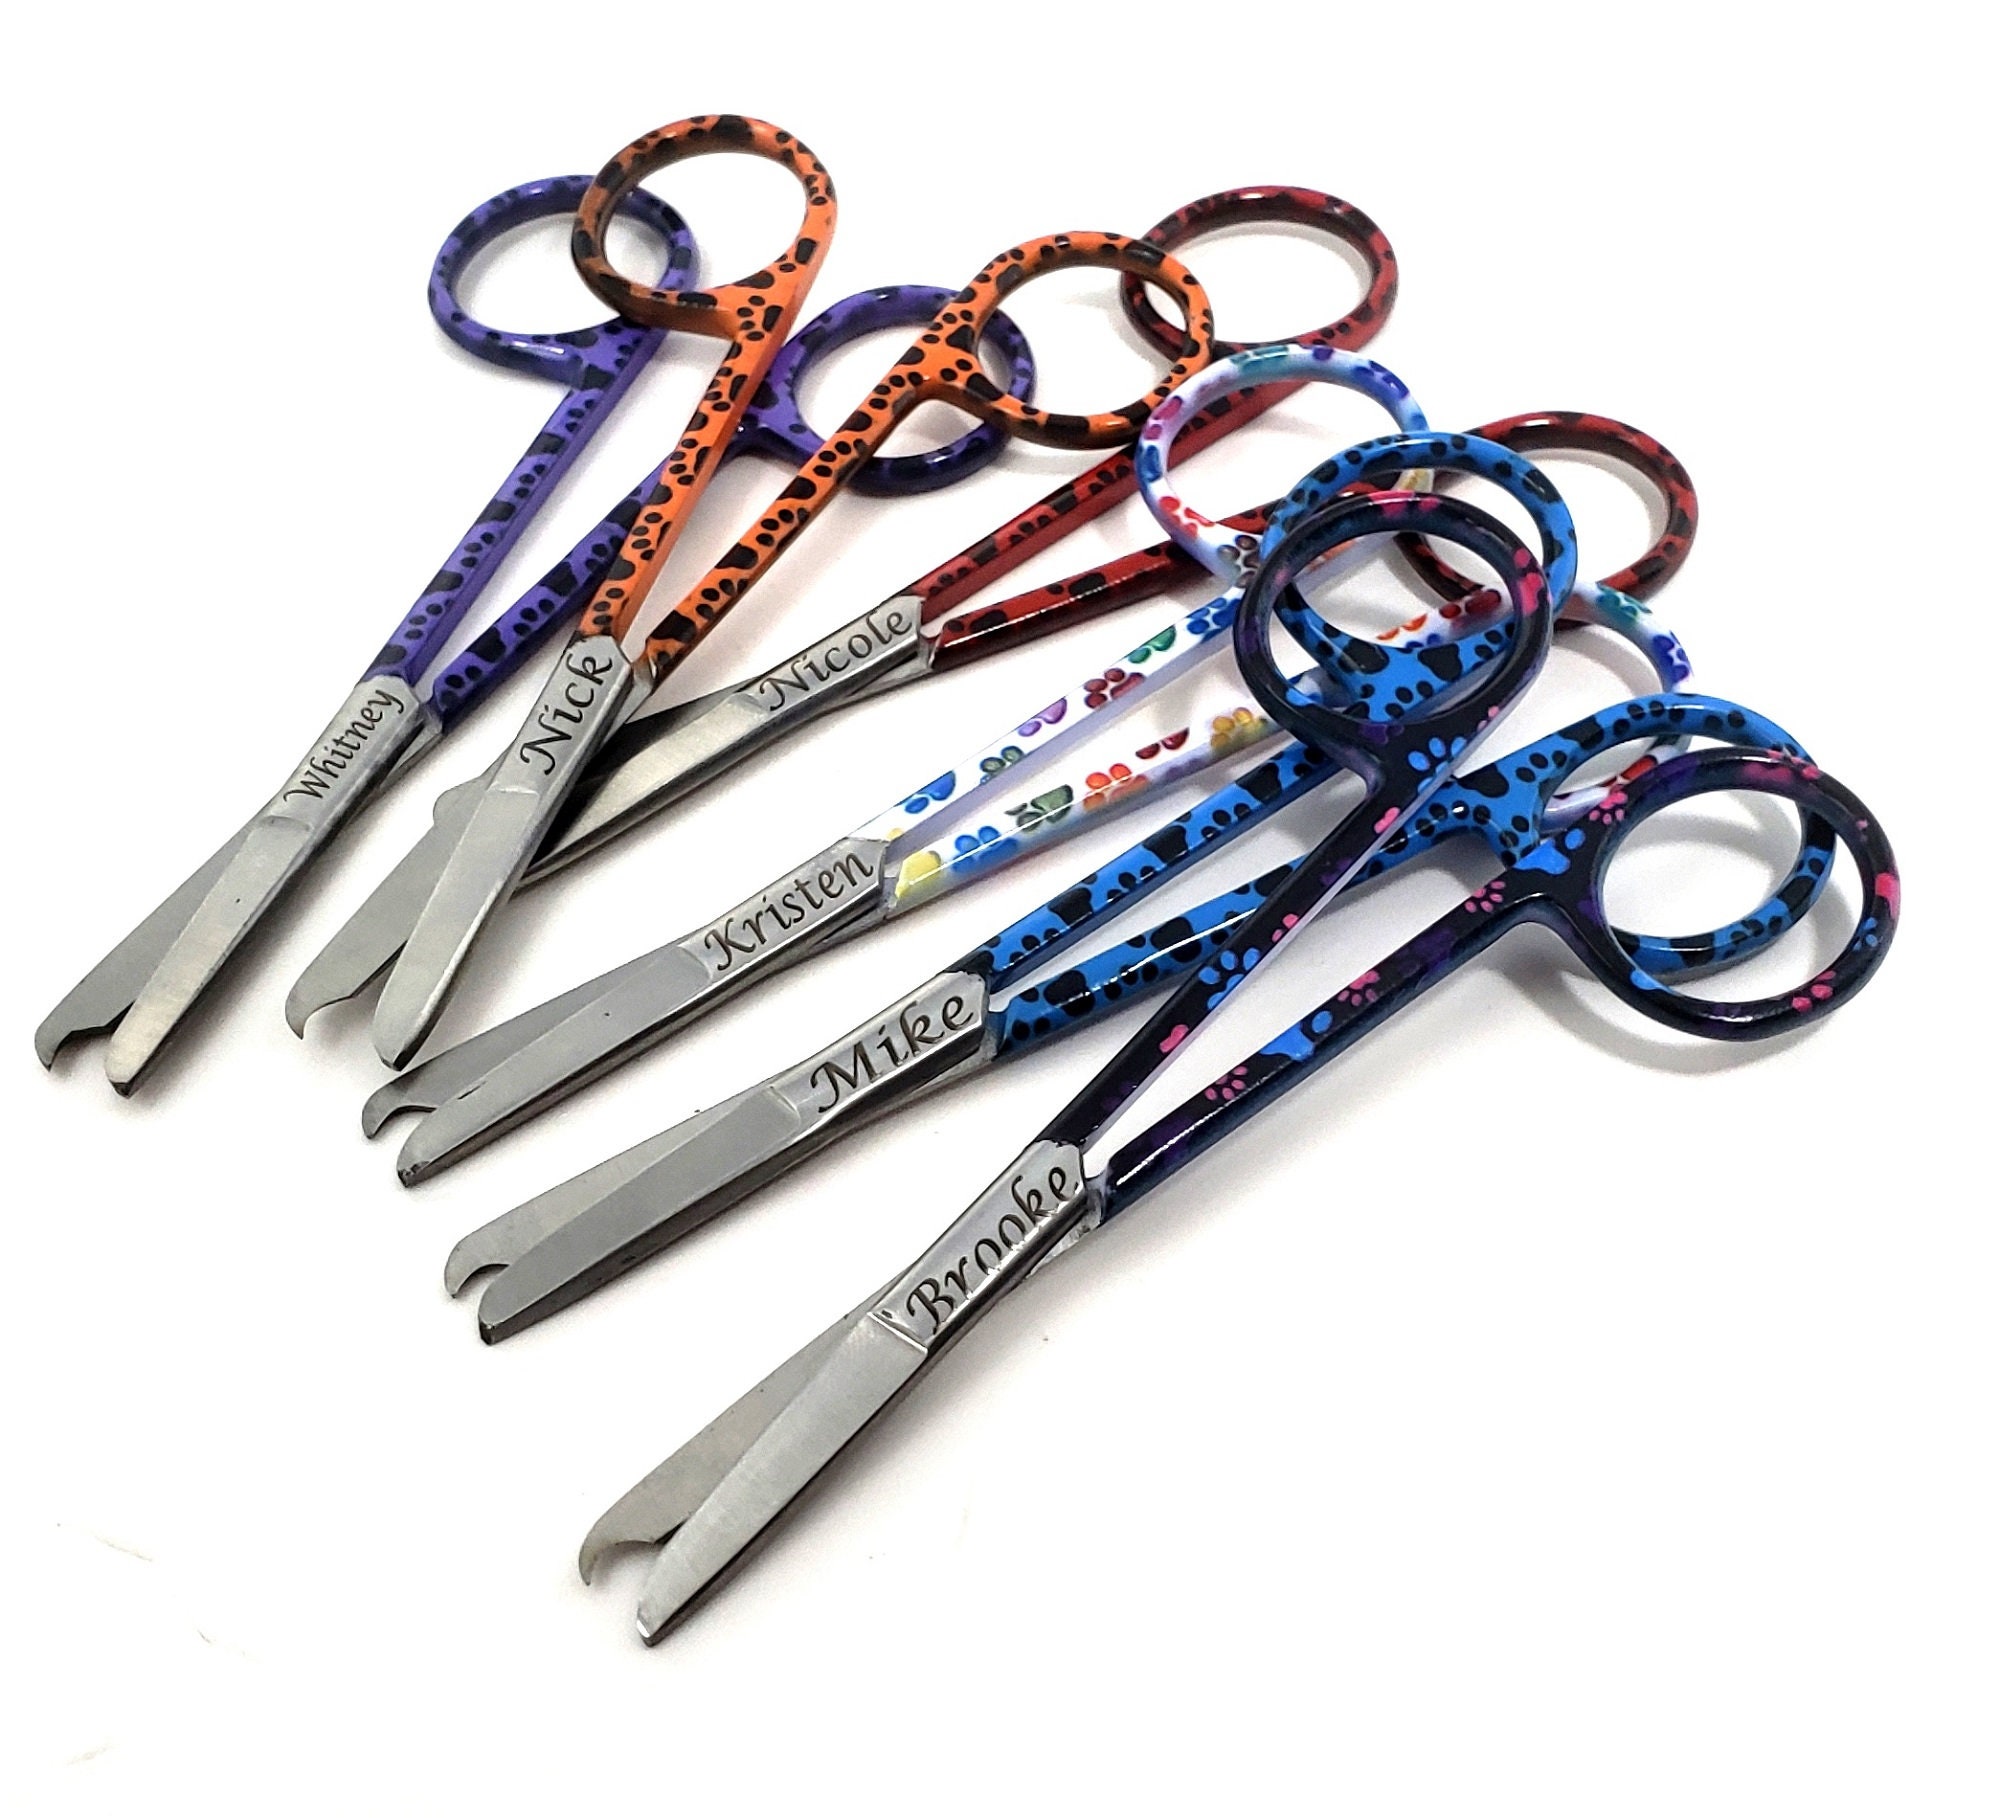 Small Craft Scissors, 3 Westcott Titanium Scissors, Cross Stitch Scissors,  Yarn Snips, Embroidery Scissors 